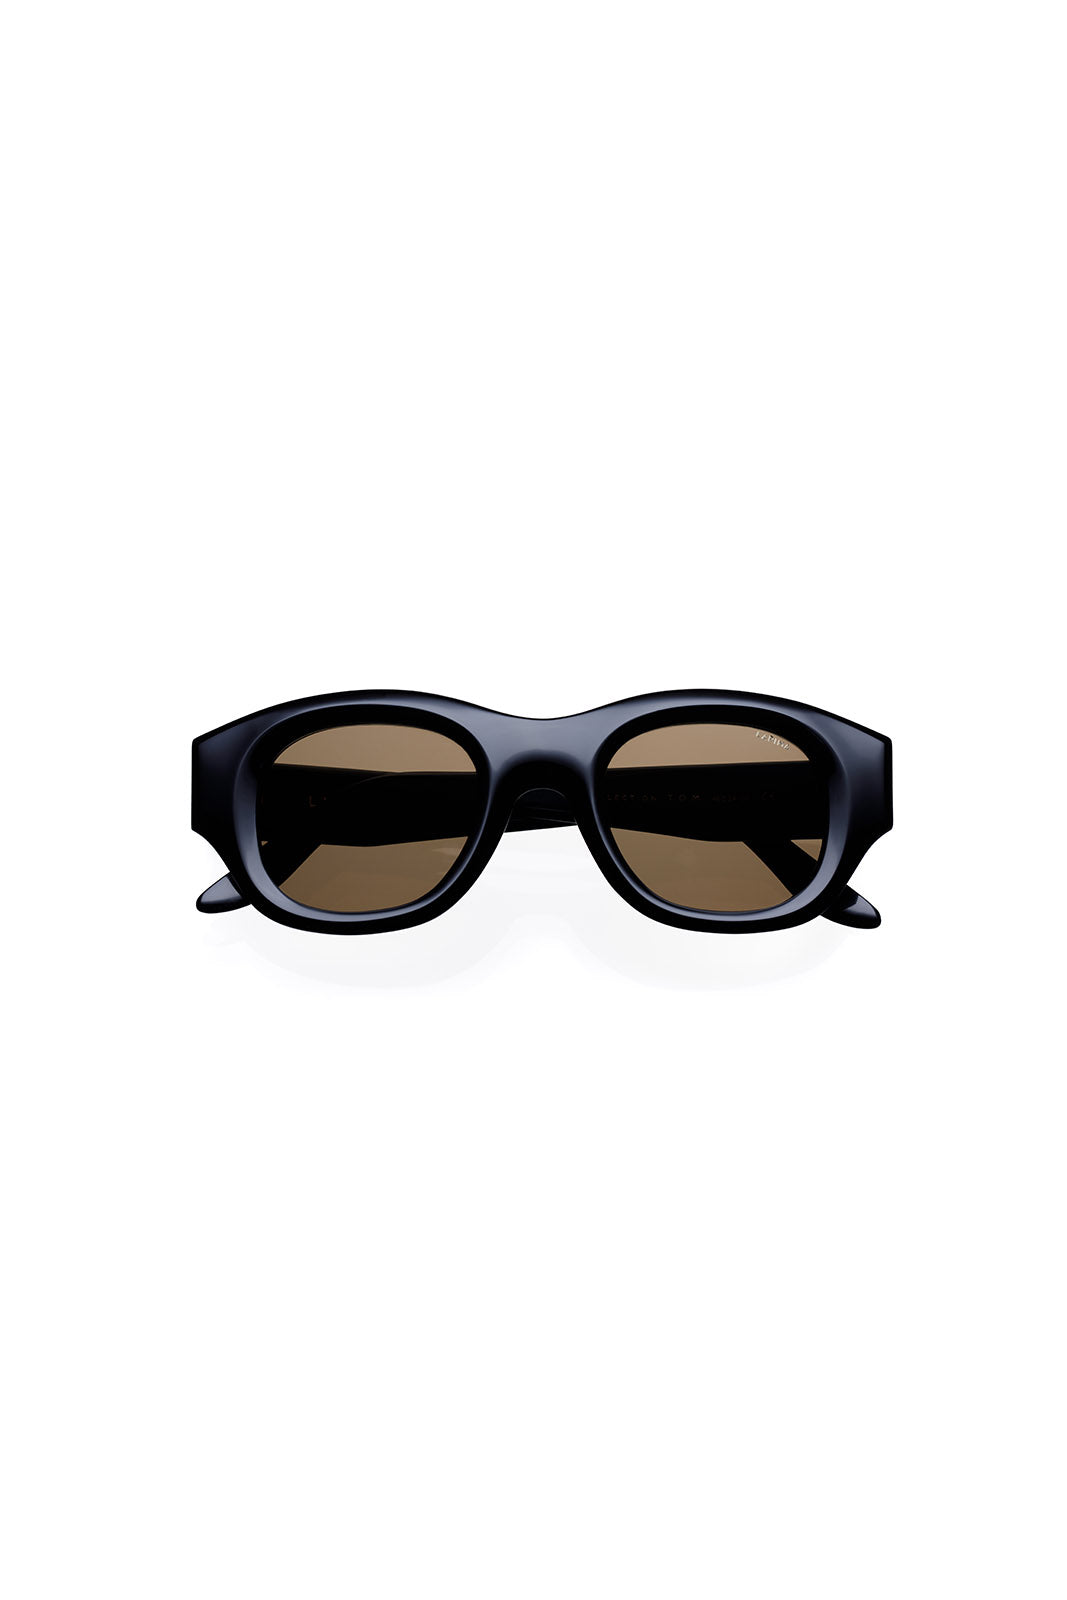 lapima-tom-black-sunglasses-amarees